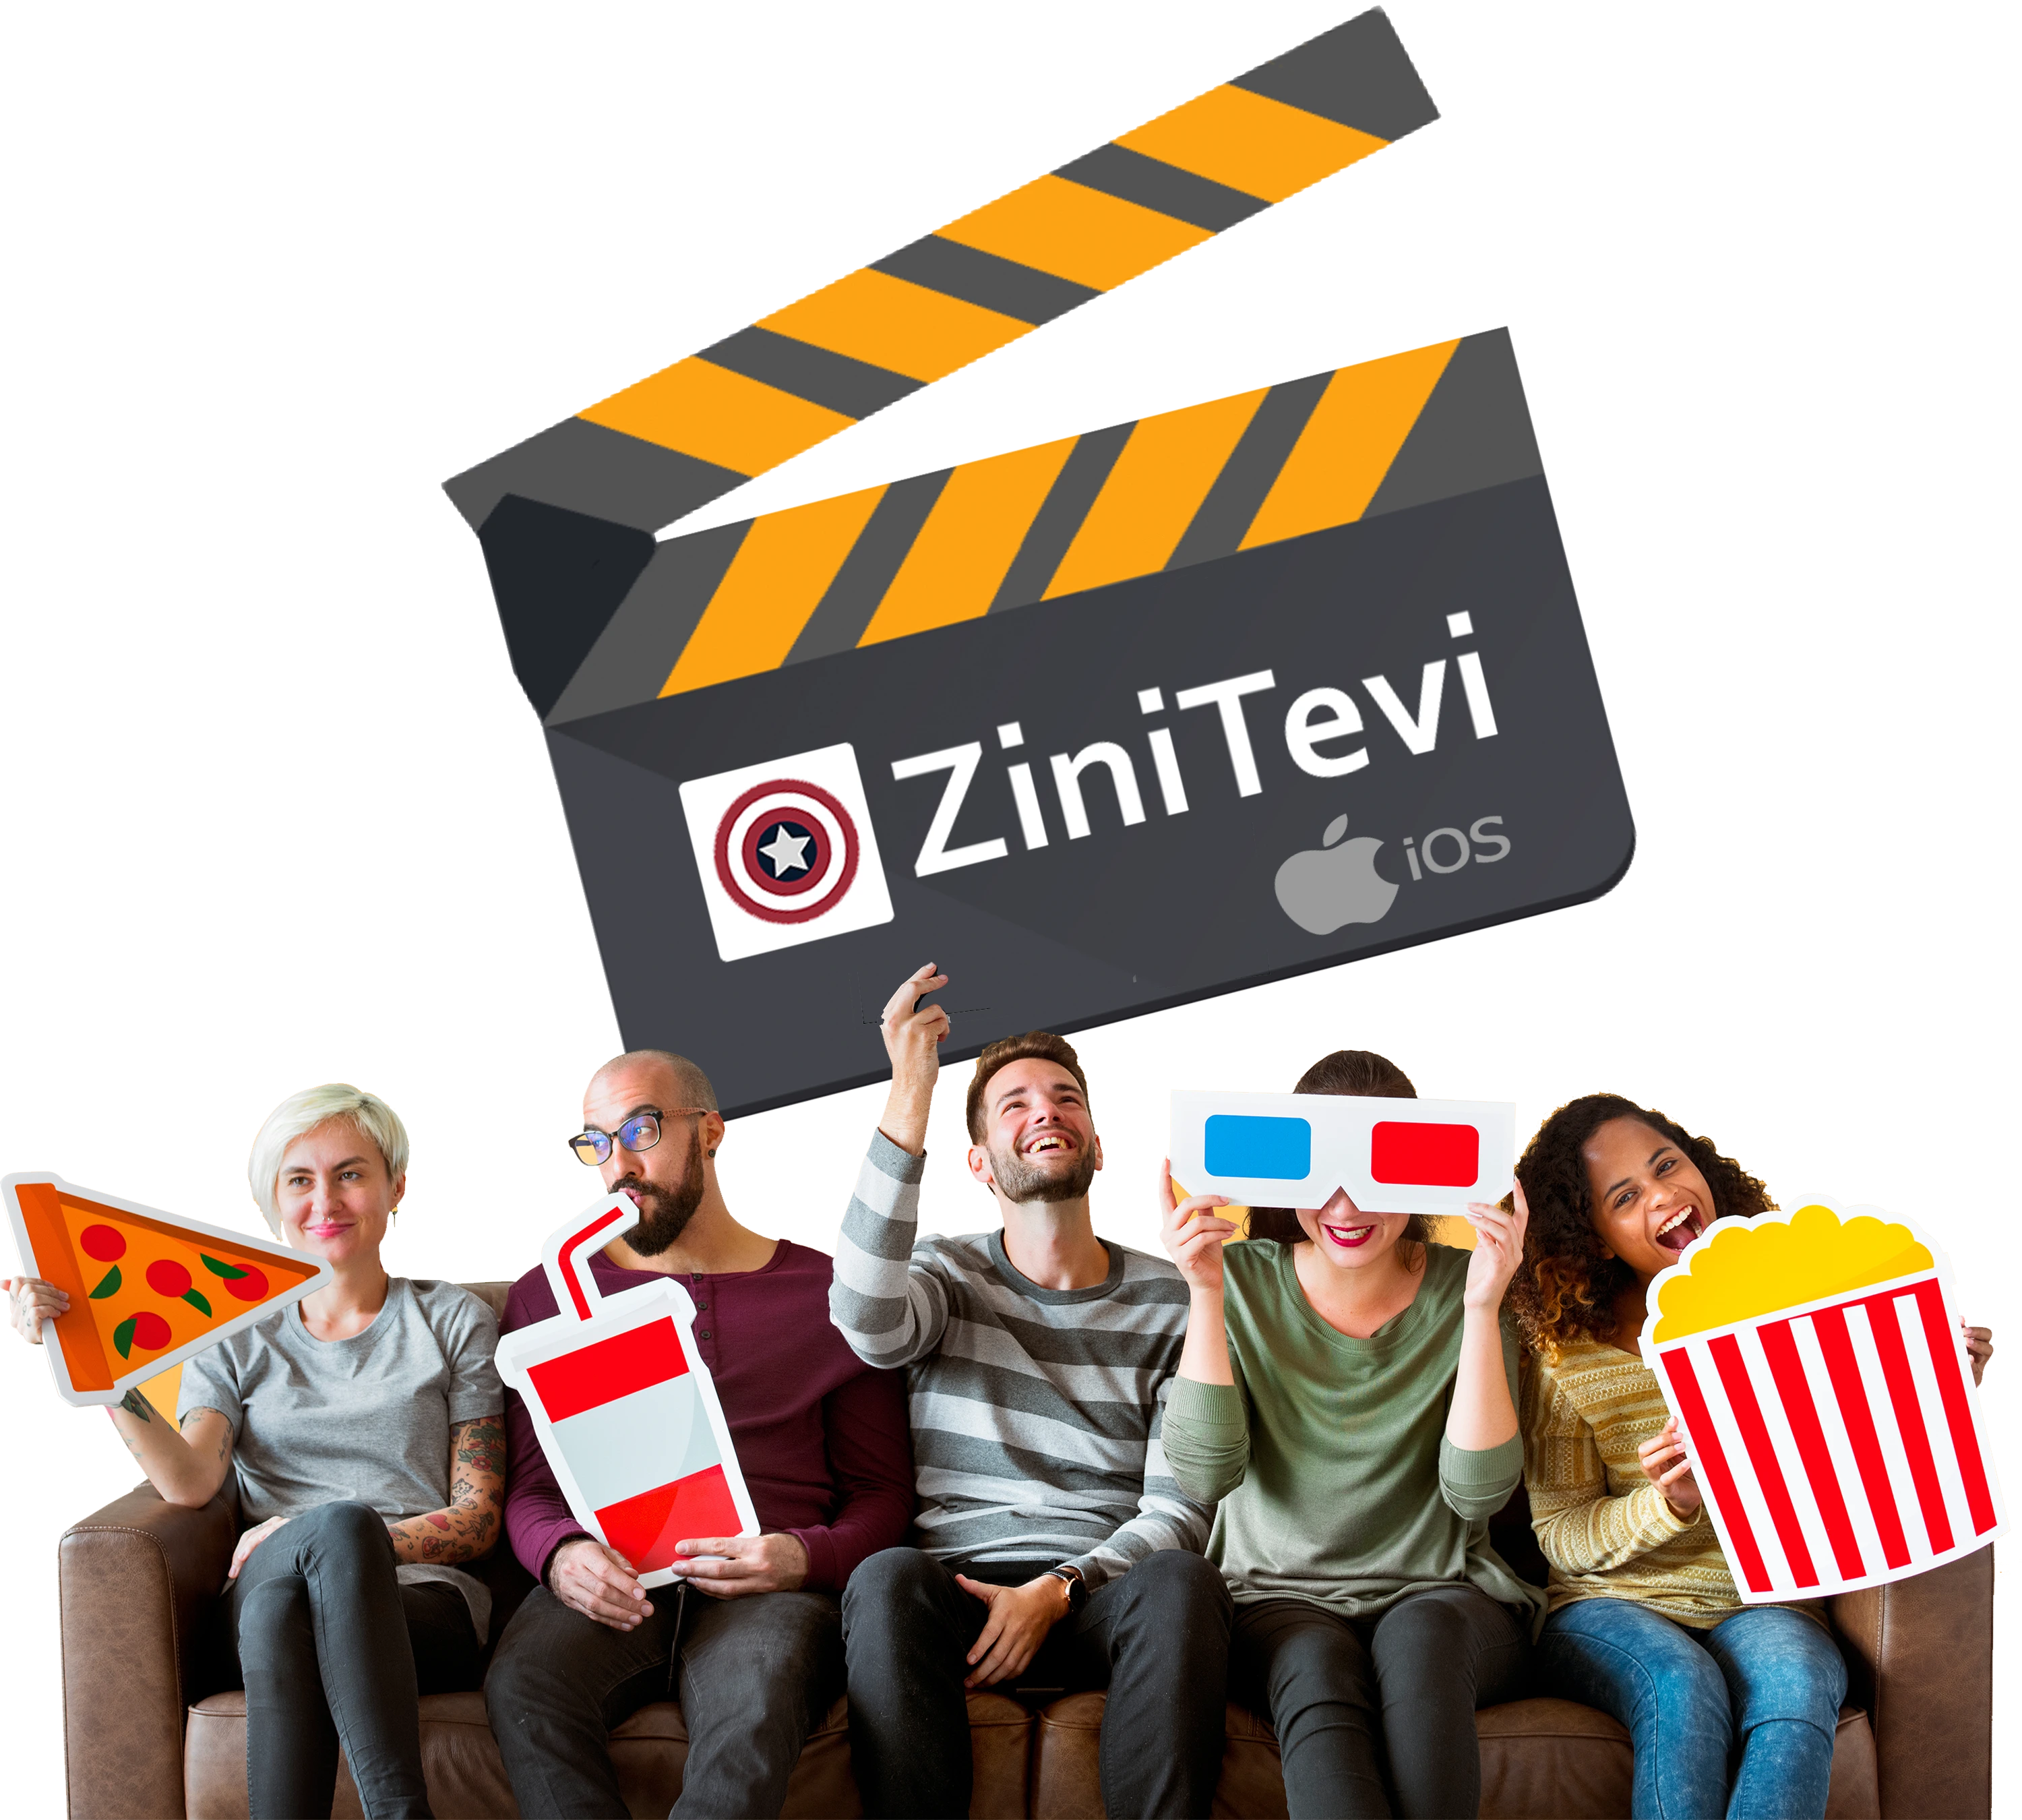 Download ZiniTevi iOS for iPhone, iPad, iPod and Mac PC/Apple TV